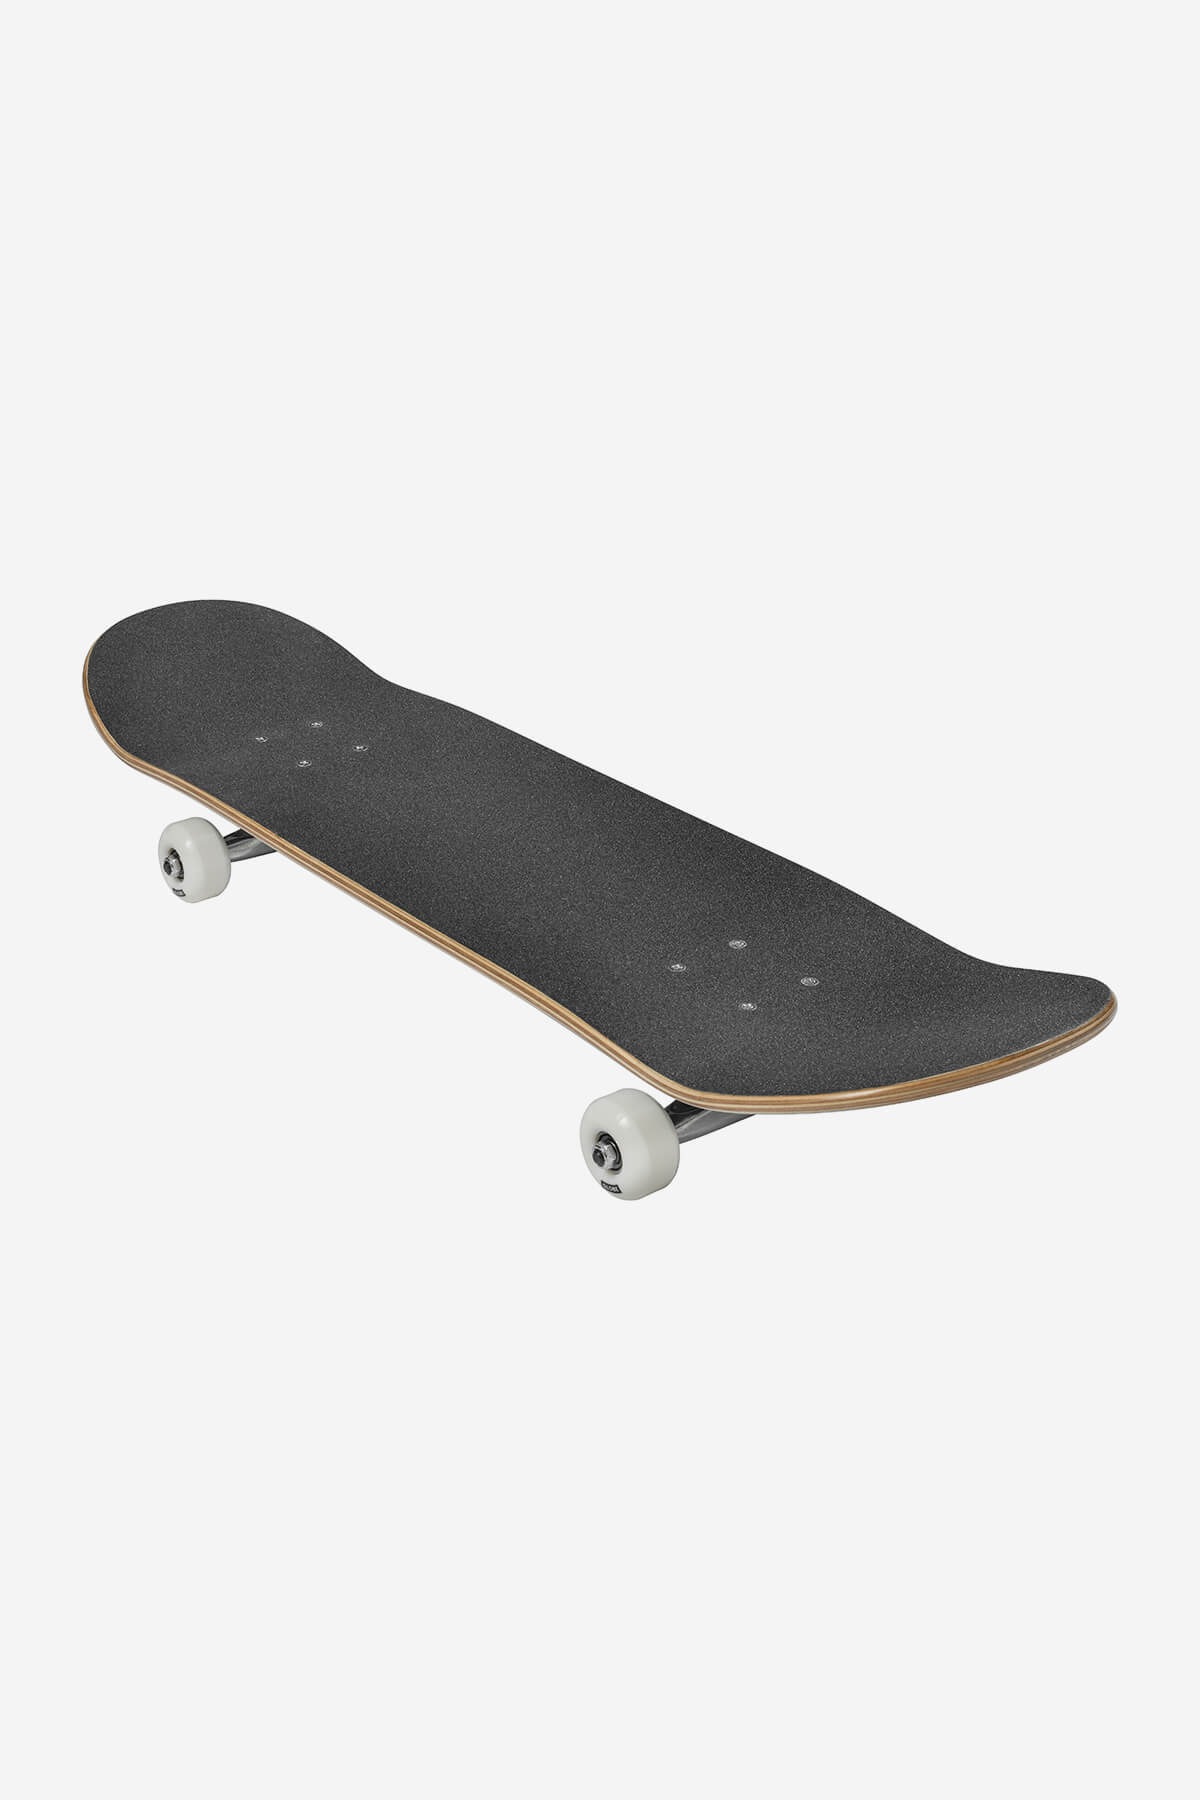 Globe - G0 Fubar - White/Zwart - 8.0" Compleet Skateboard